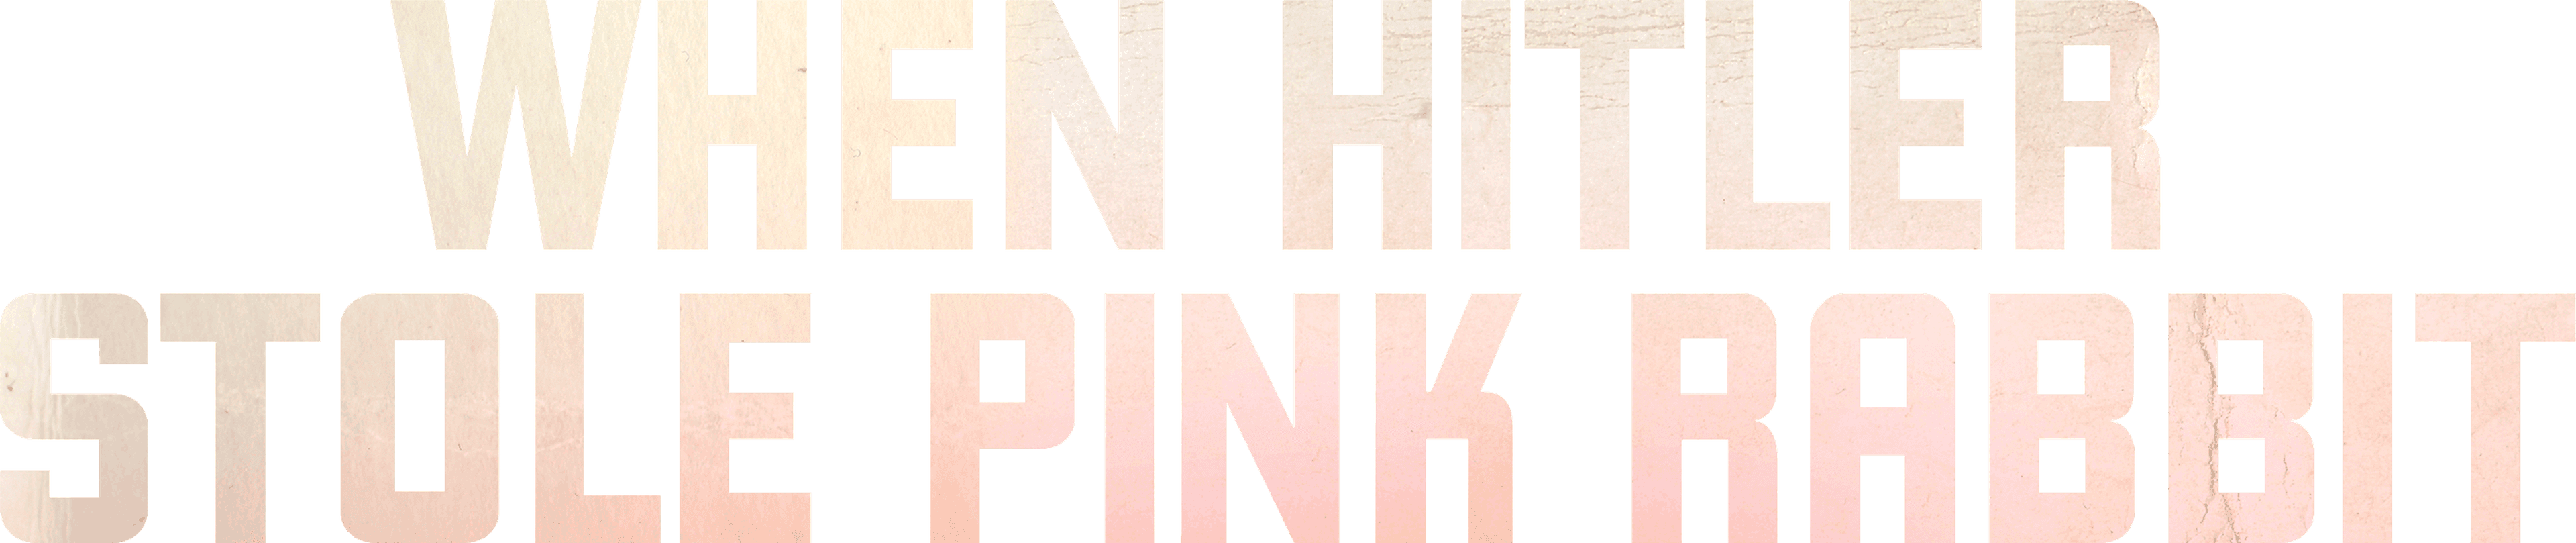 When Hitler Stole Pink Rabbit logo